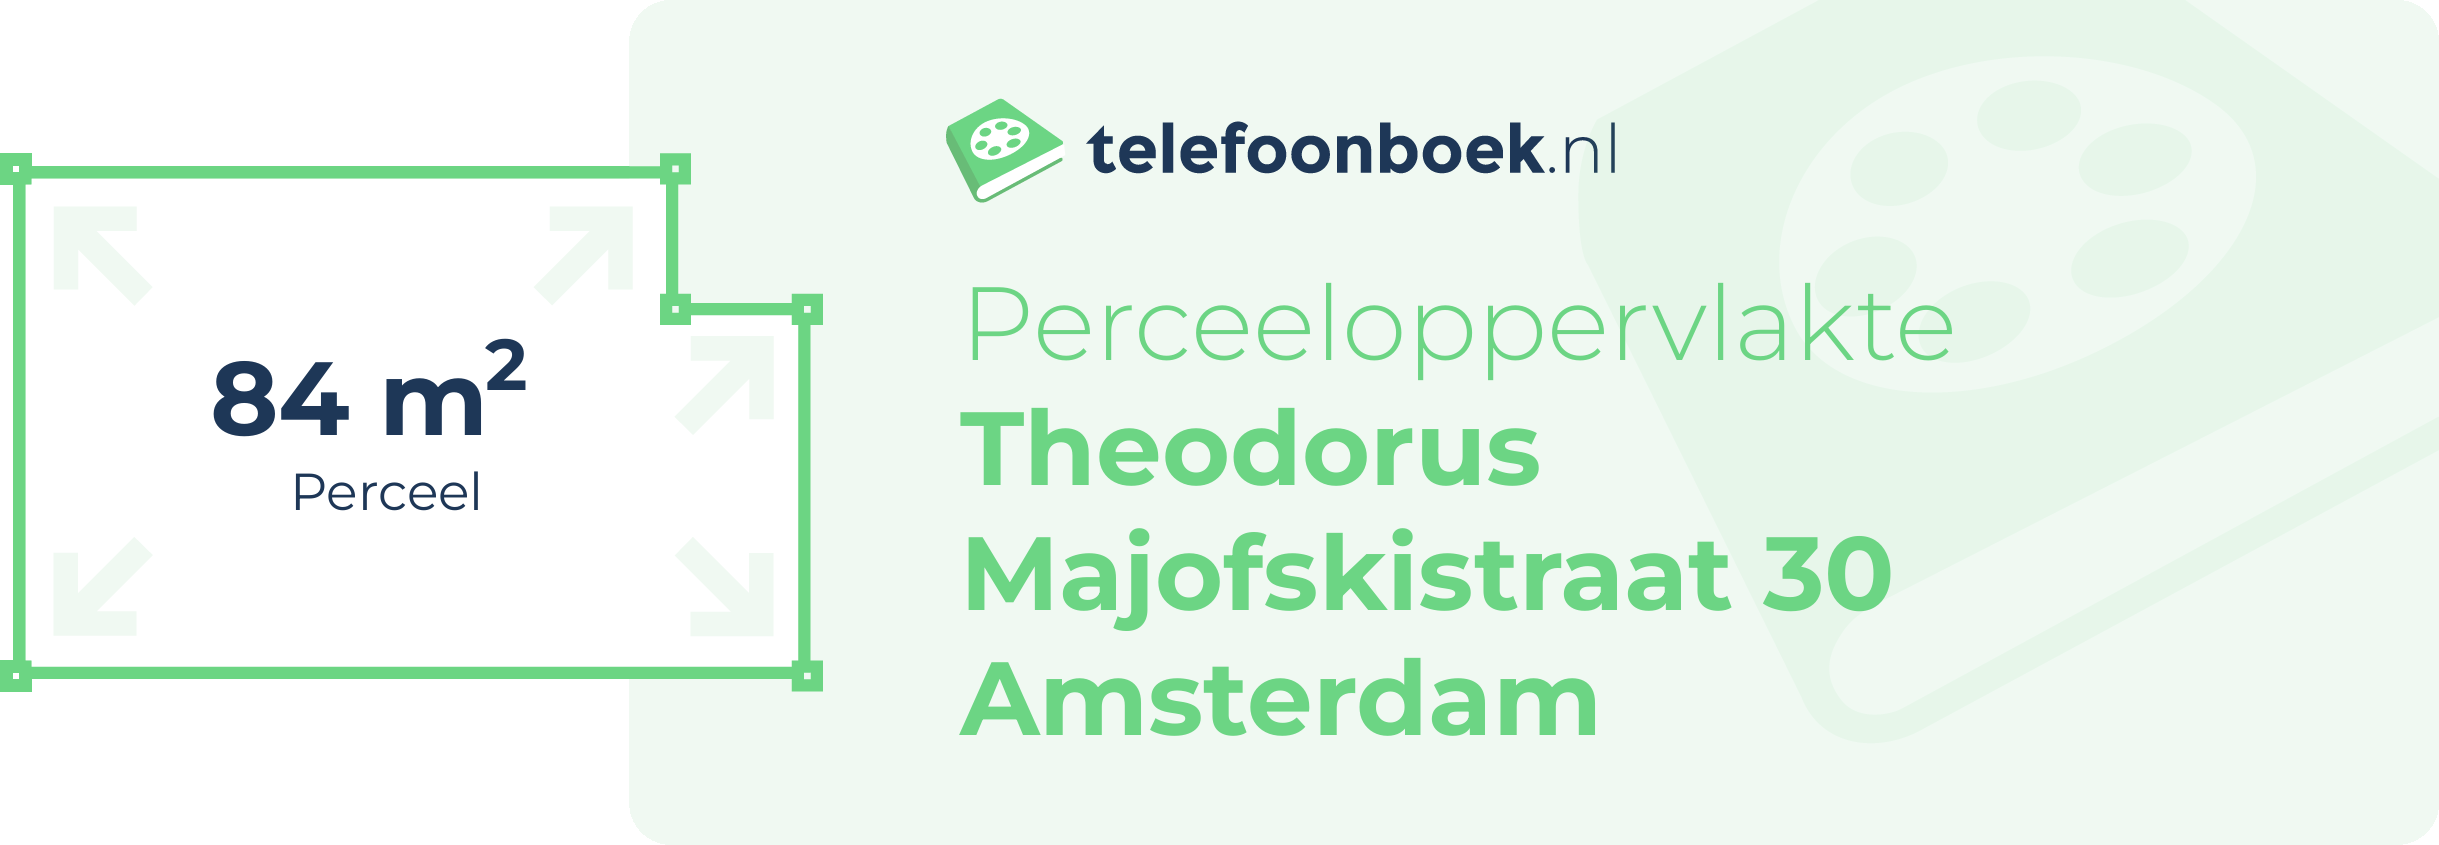 Perceeloppervlakte Theodorus Majofskistraat 30 Amsterdam